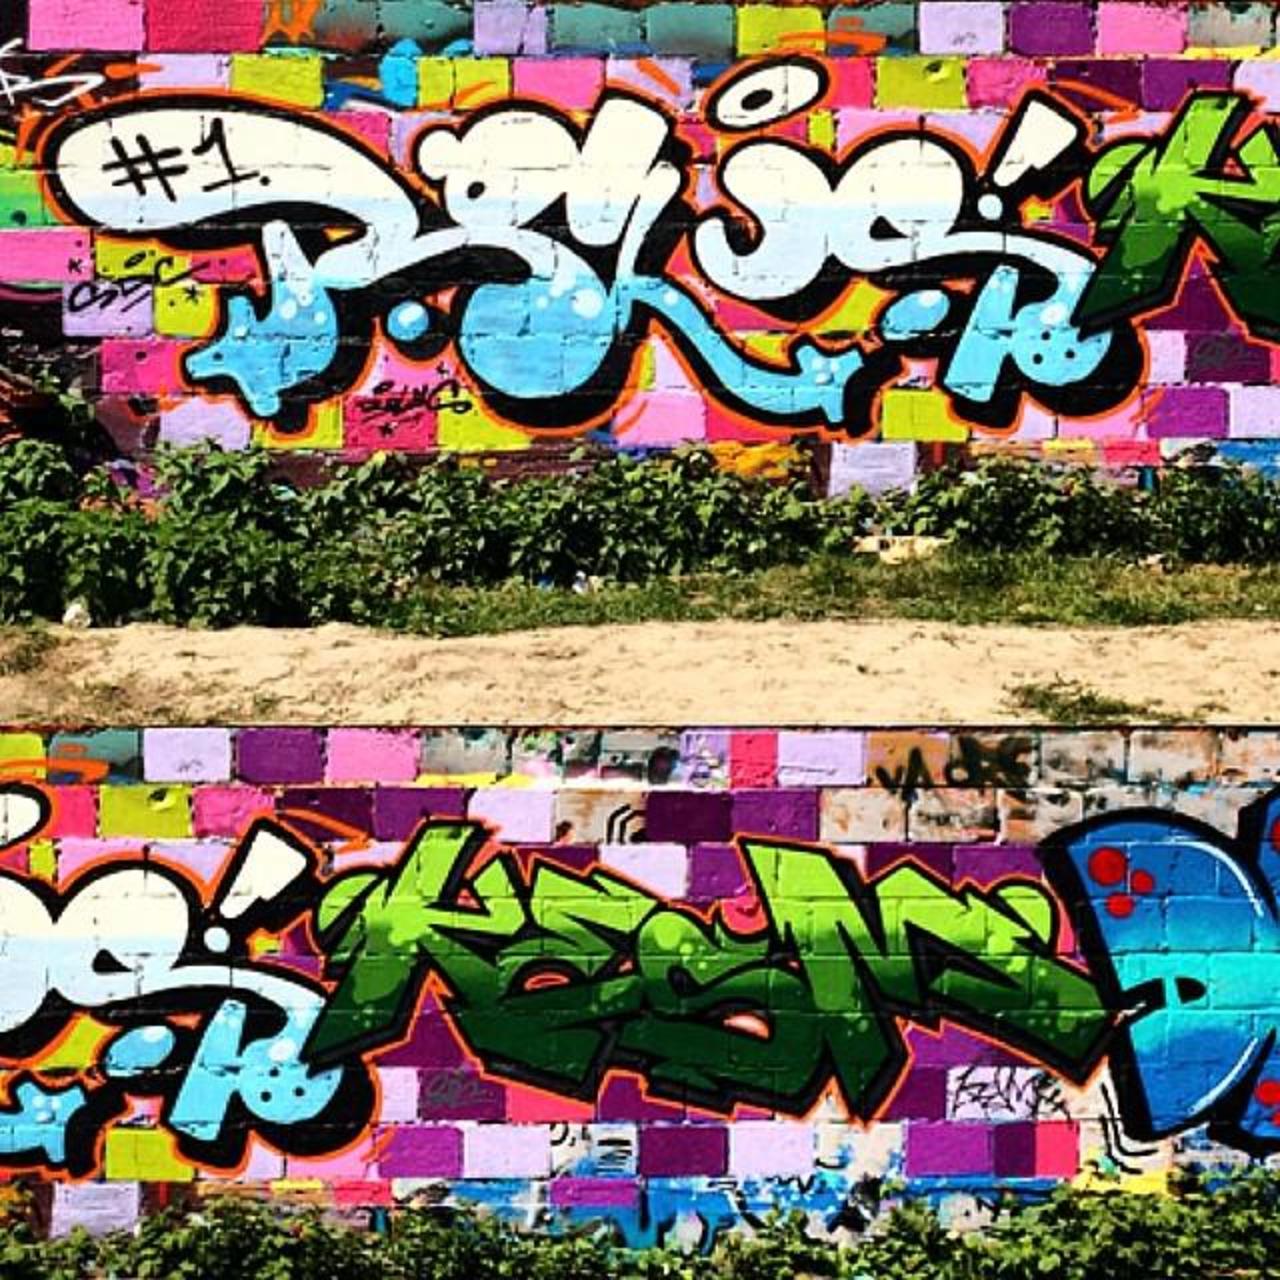 Daily fixx #graffiti #dutchgraffiti #urbanart #characters #graff #paint #art #montanacans #spraypaint by dr_latex #… http://t.co/Qjh6QL10dS